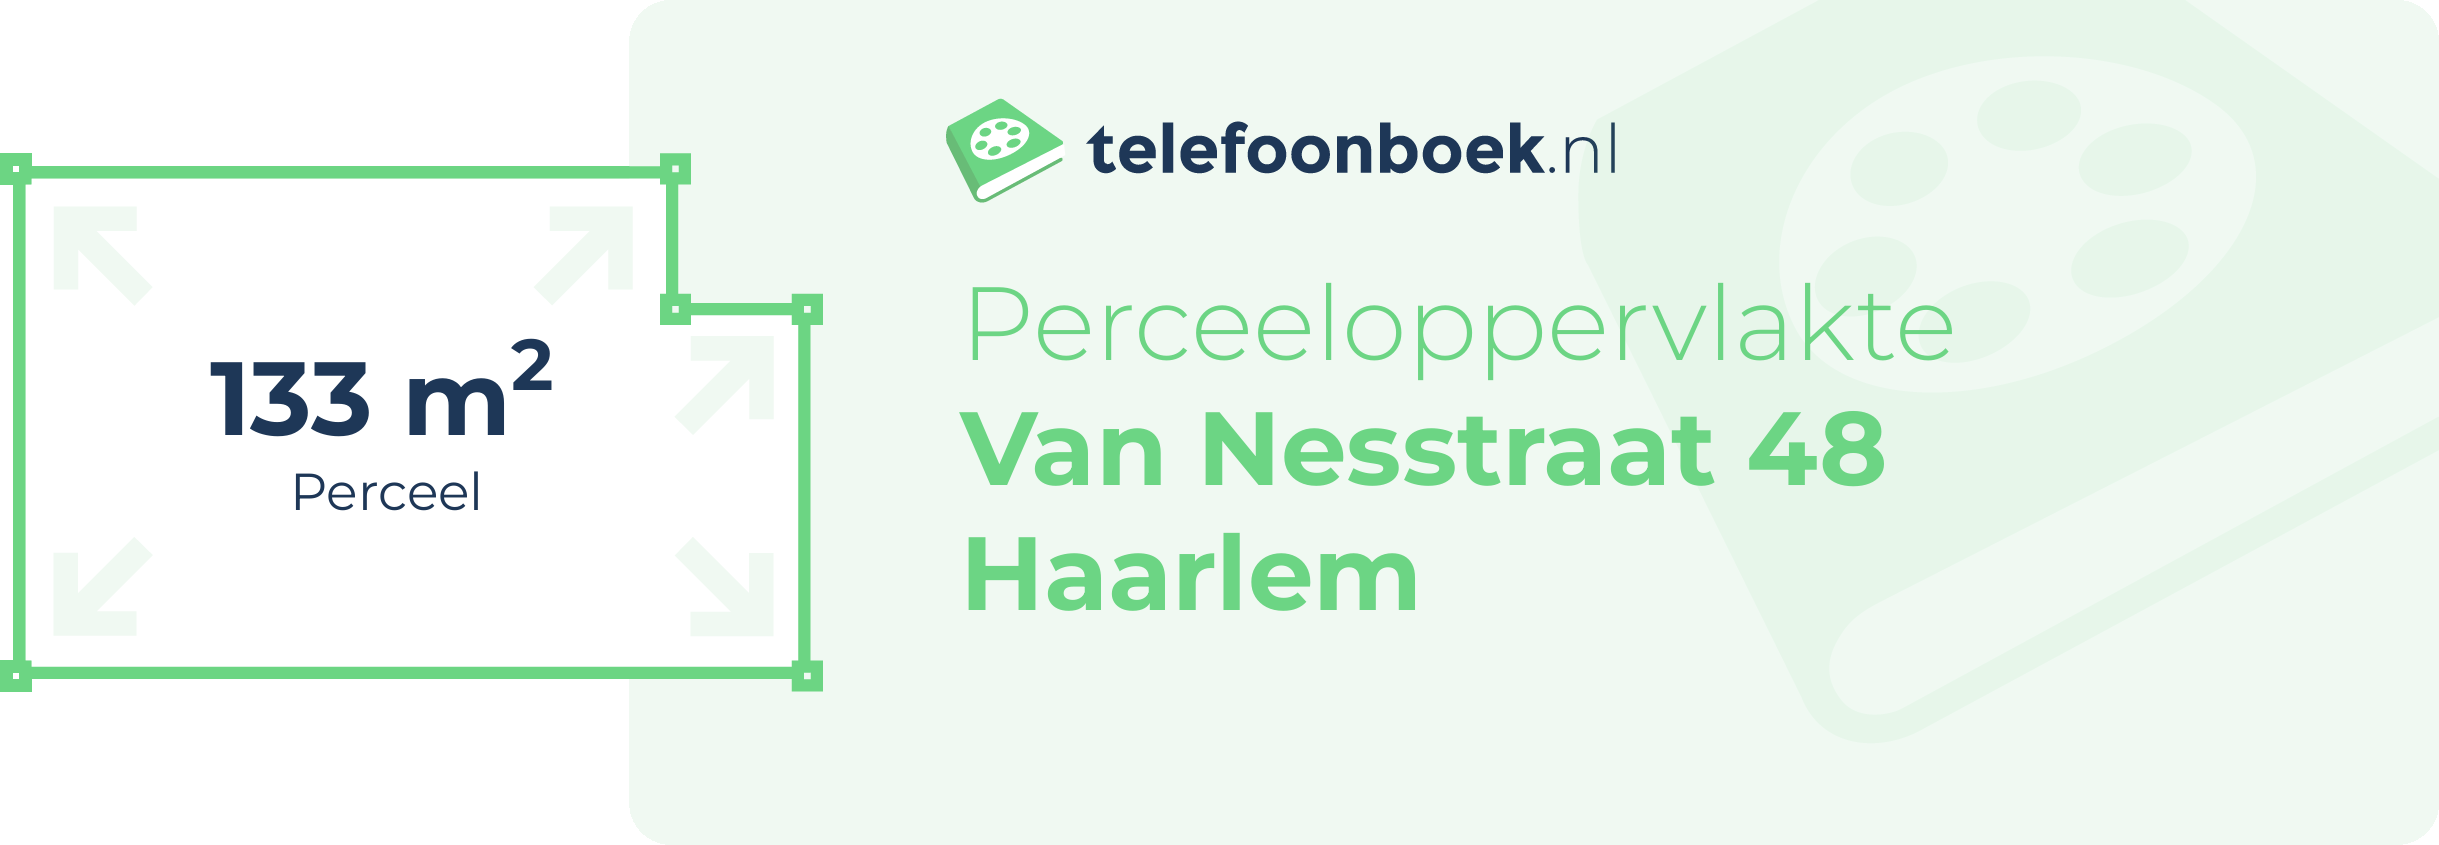 Perceeloppervlakte Van Nesstraat 48 Haarlem